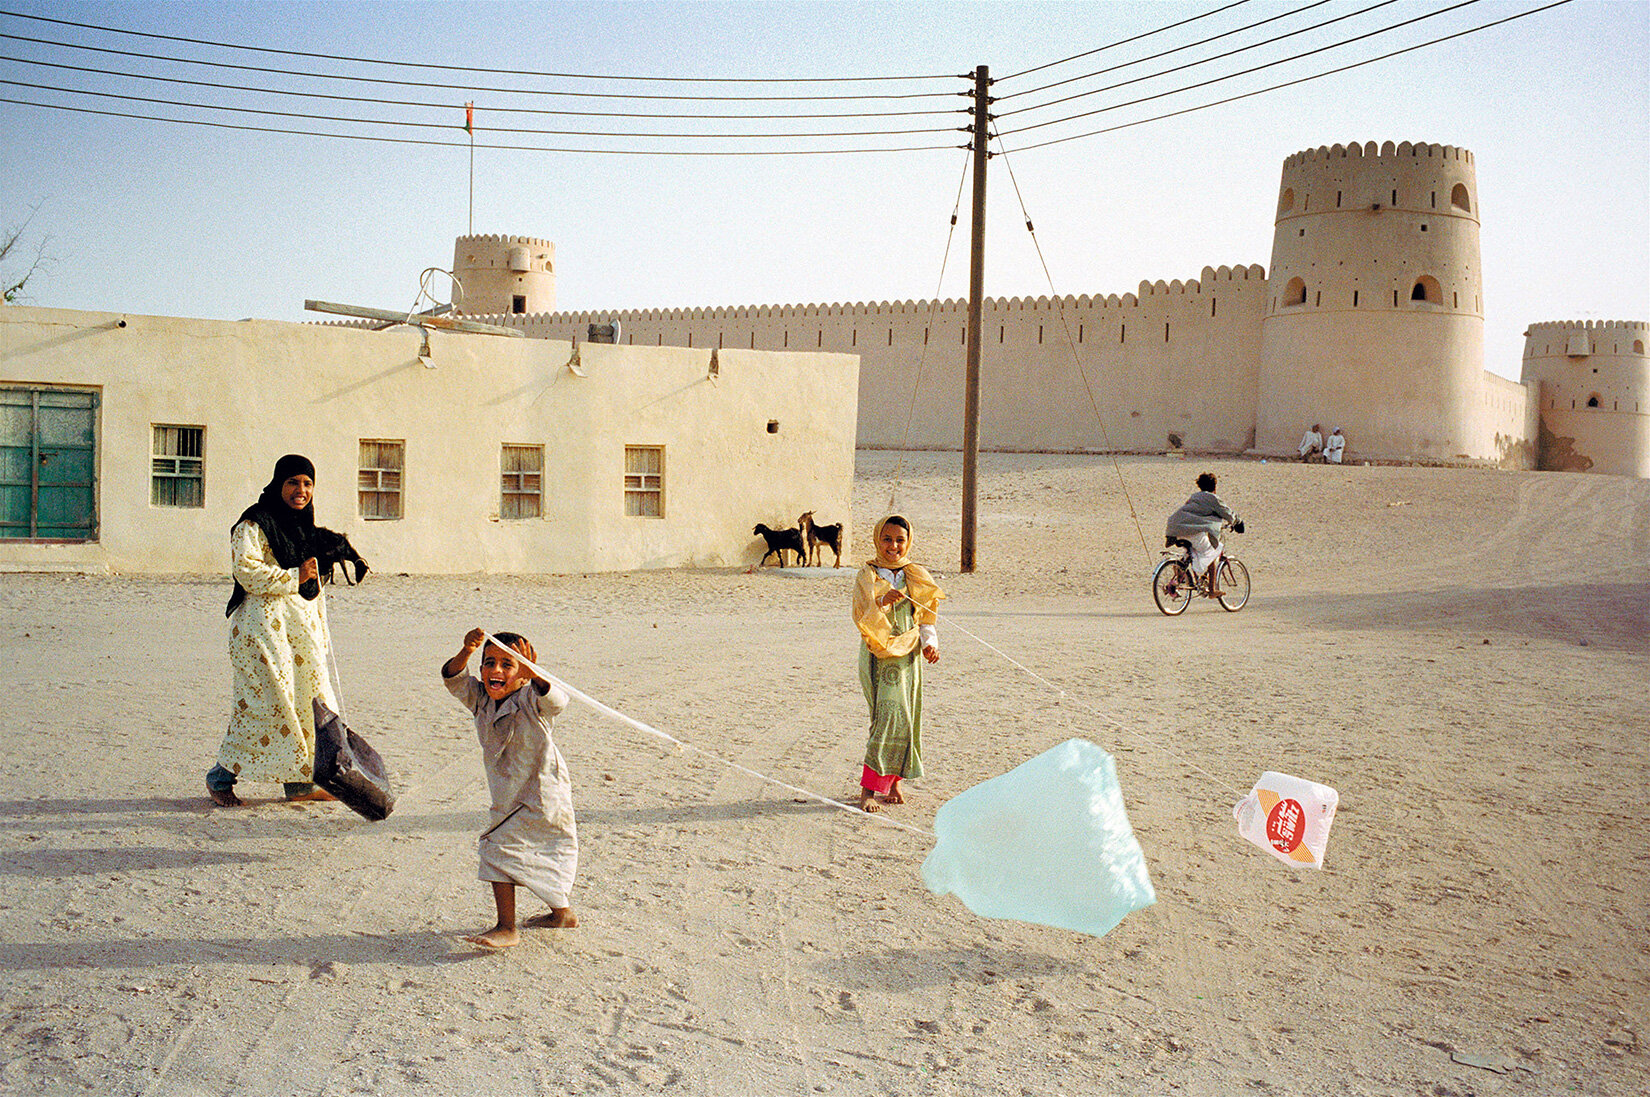  IAN BERRY/MAGNUM PHOTOS Ras al-Hadd near Sur, Oman. 2004. 